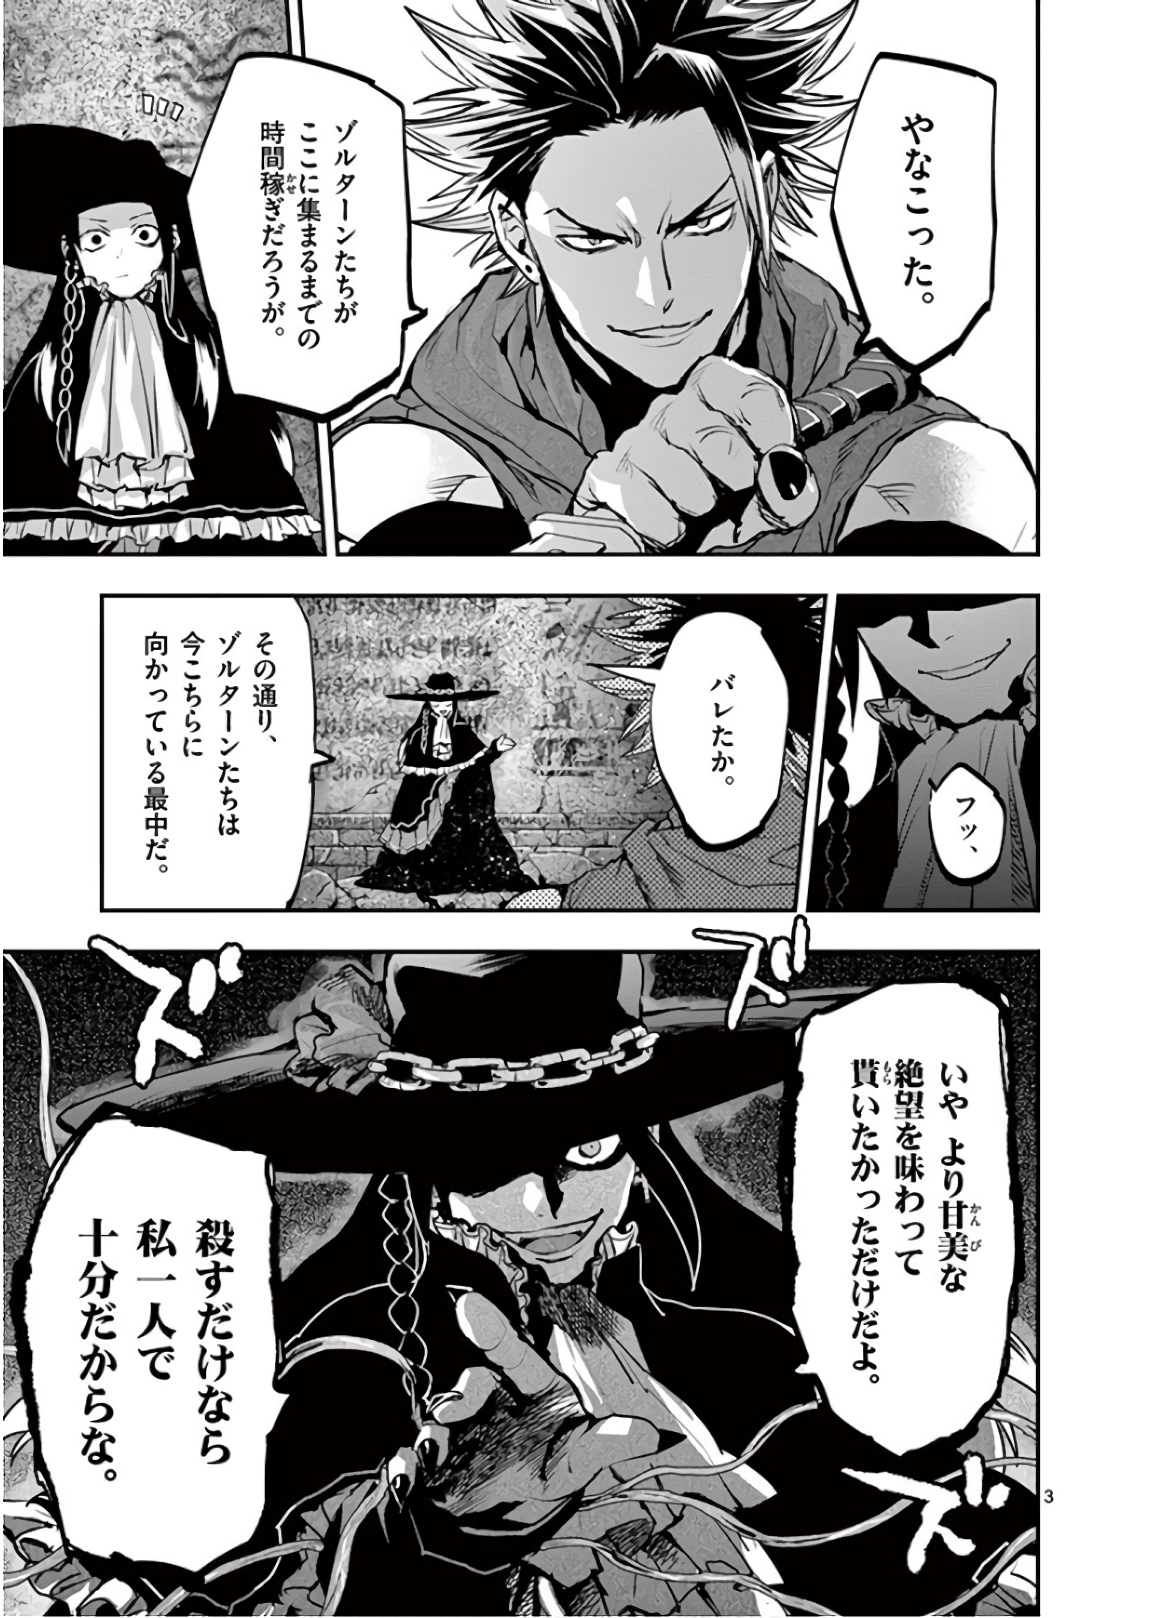 Ginrou Bloodborne - Chapter 89 - Page 3